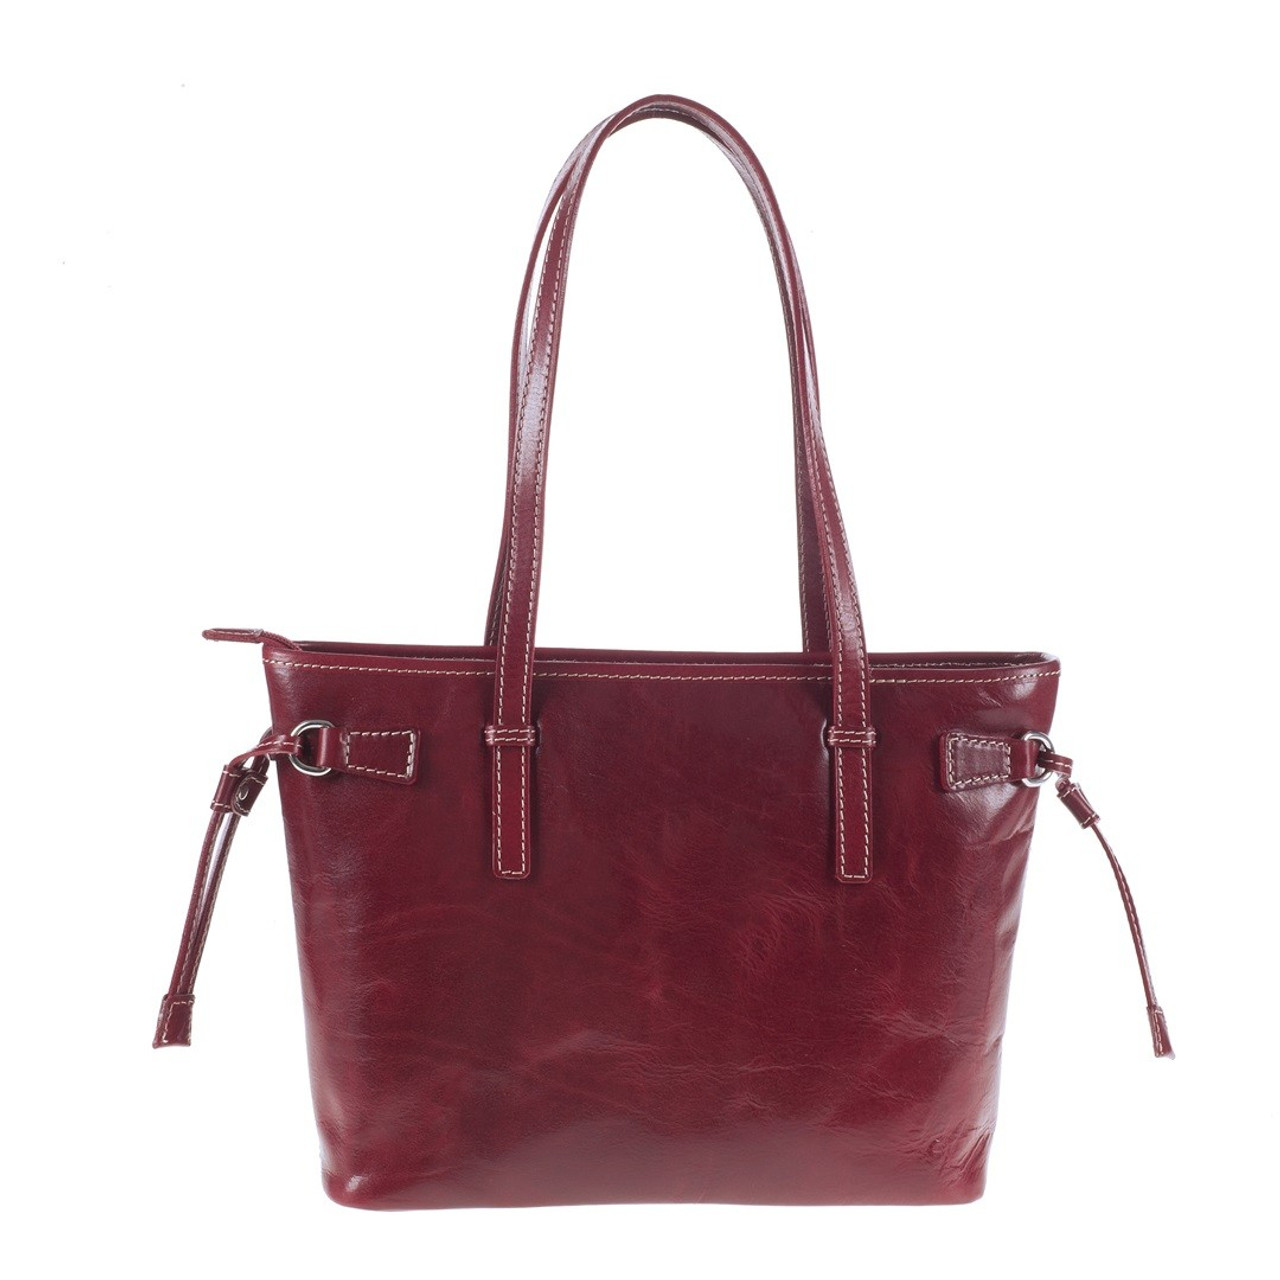 Chiarugi Italian Leather Tote Shopper Bag